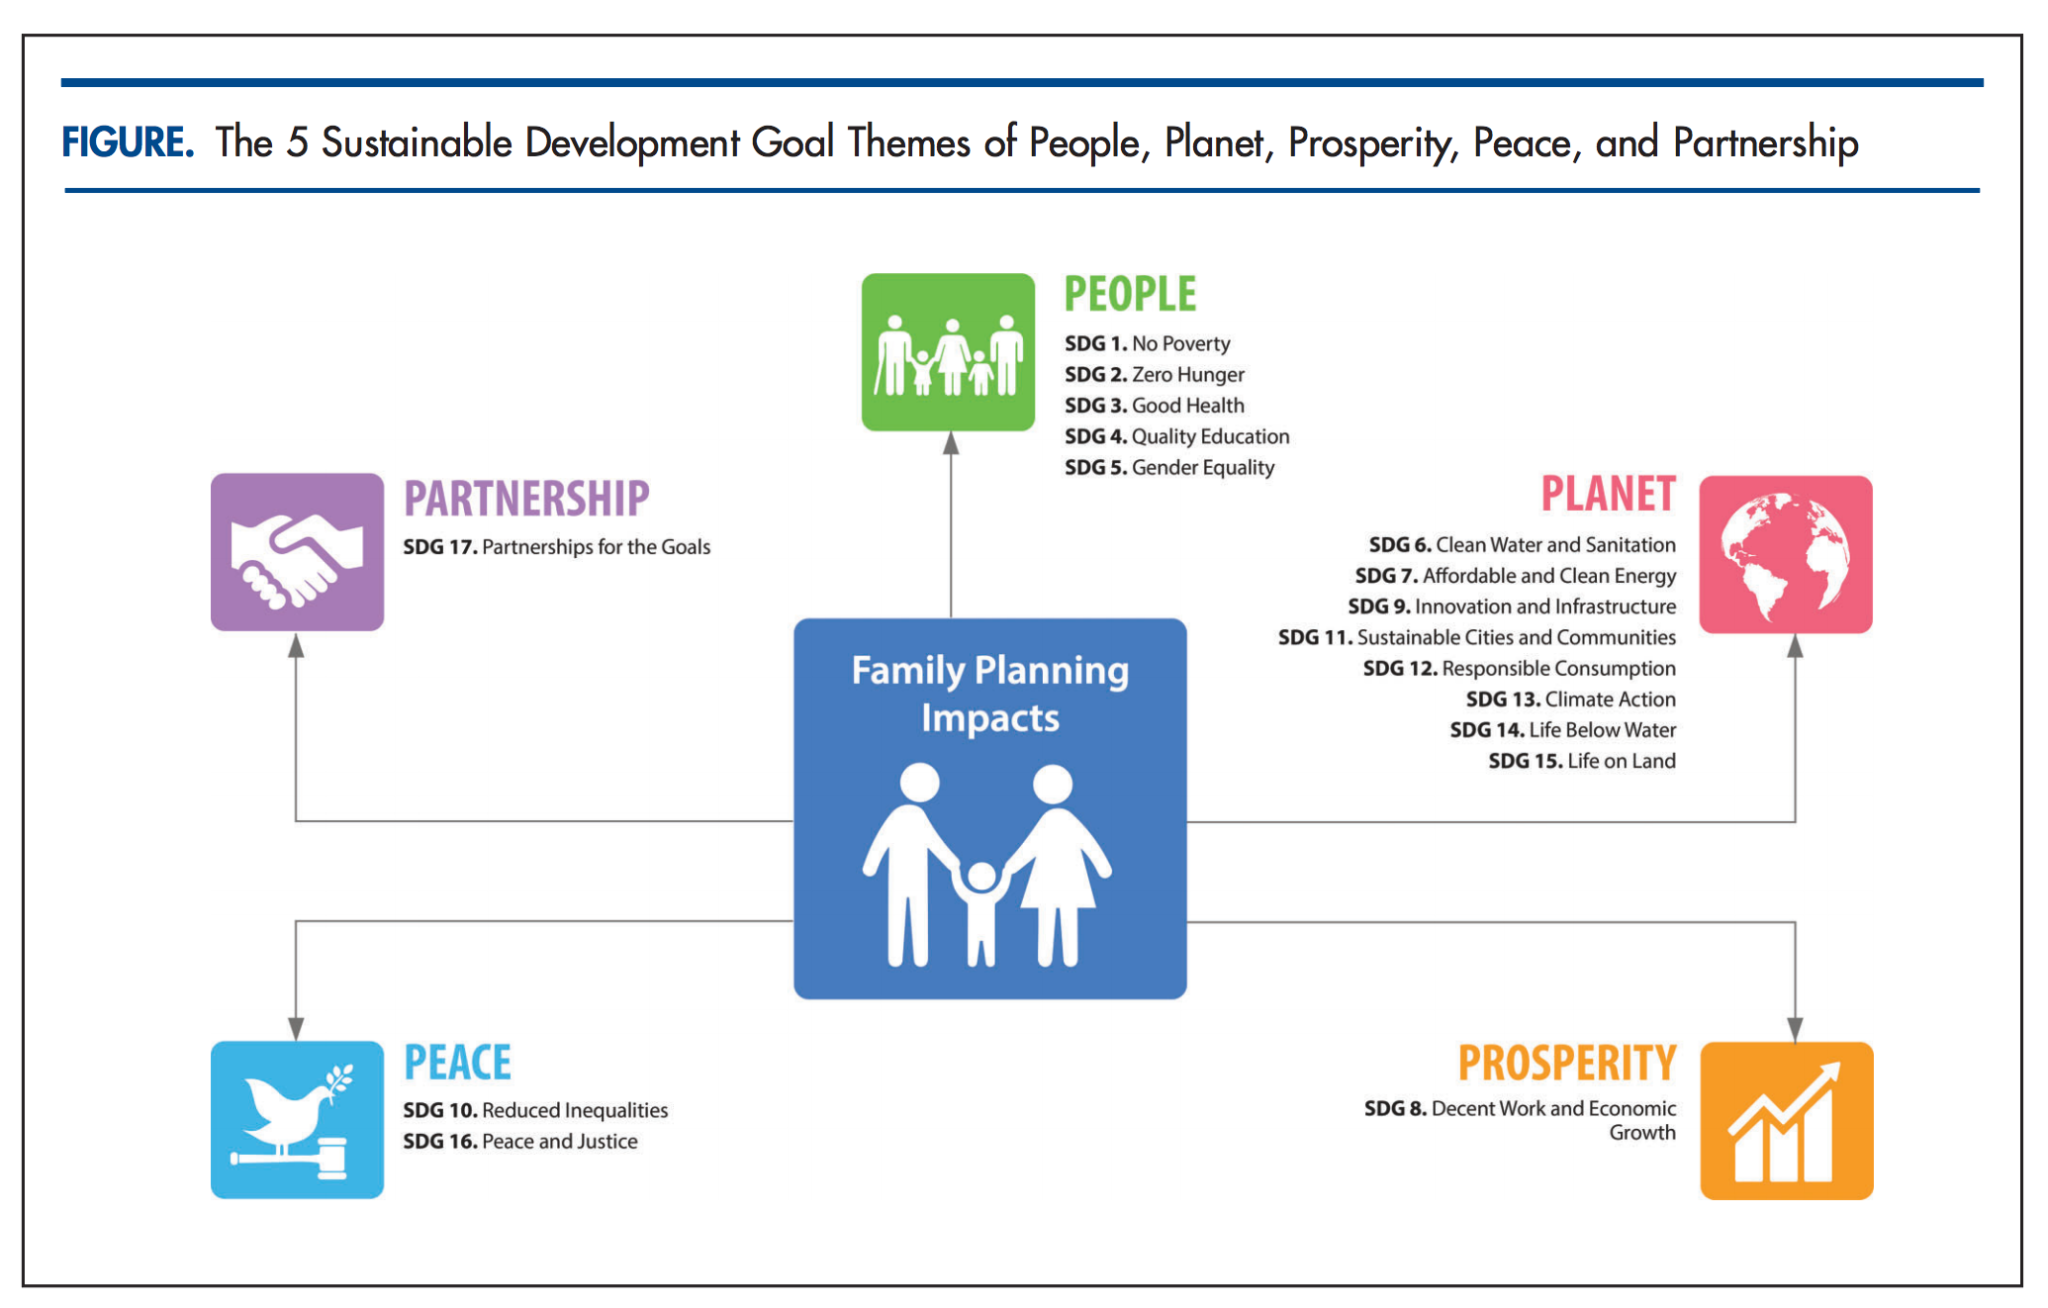 5 sustainable development goal themes: People, Planet, Prosperity, Peace, Partnership